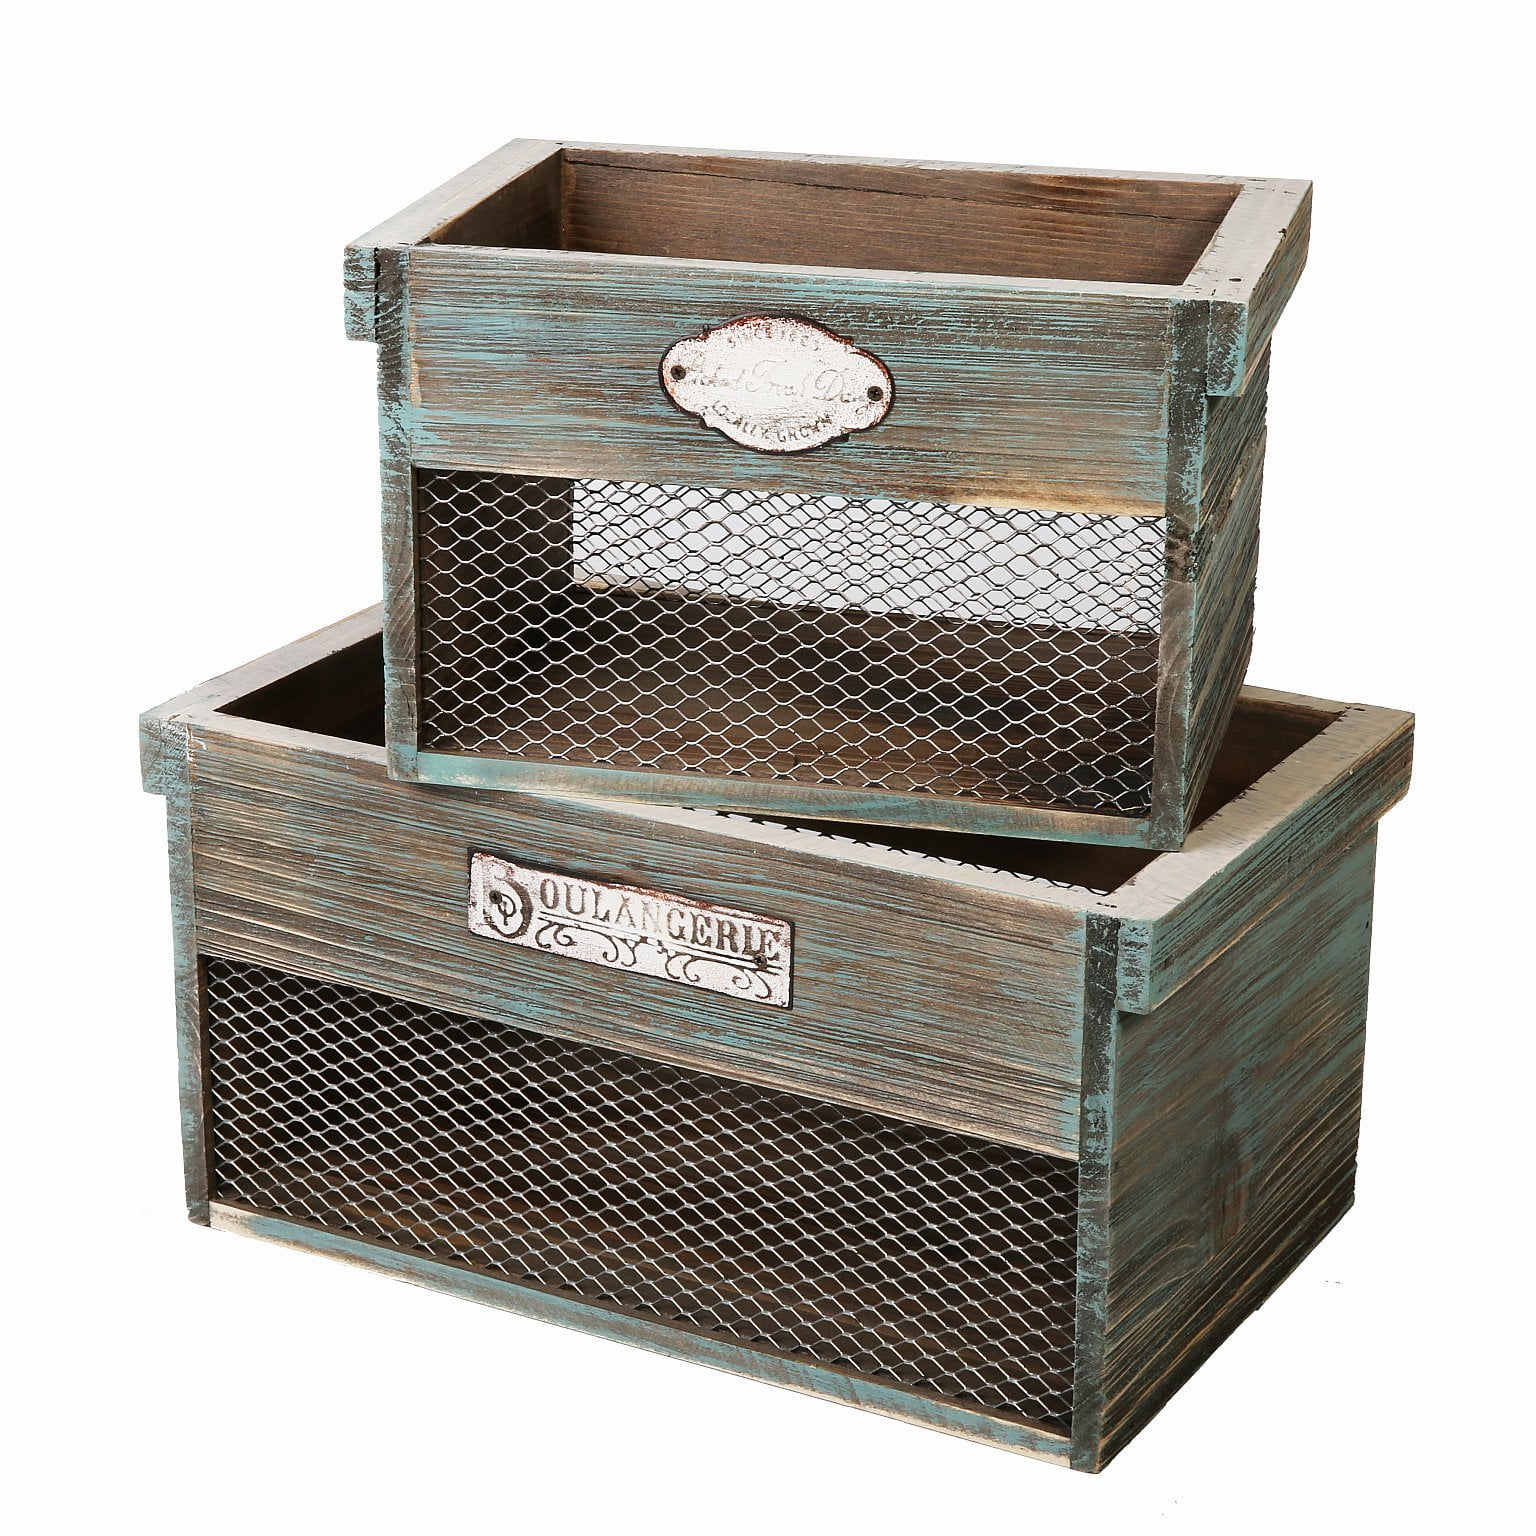 Rustic Farmhouse Wood Box SLPR Decorative Storage Wooden Crates with Metal Trims Set of 3, Antique Black